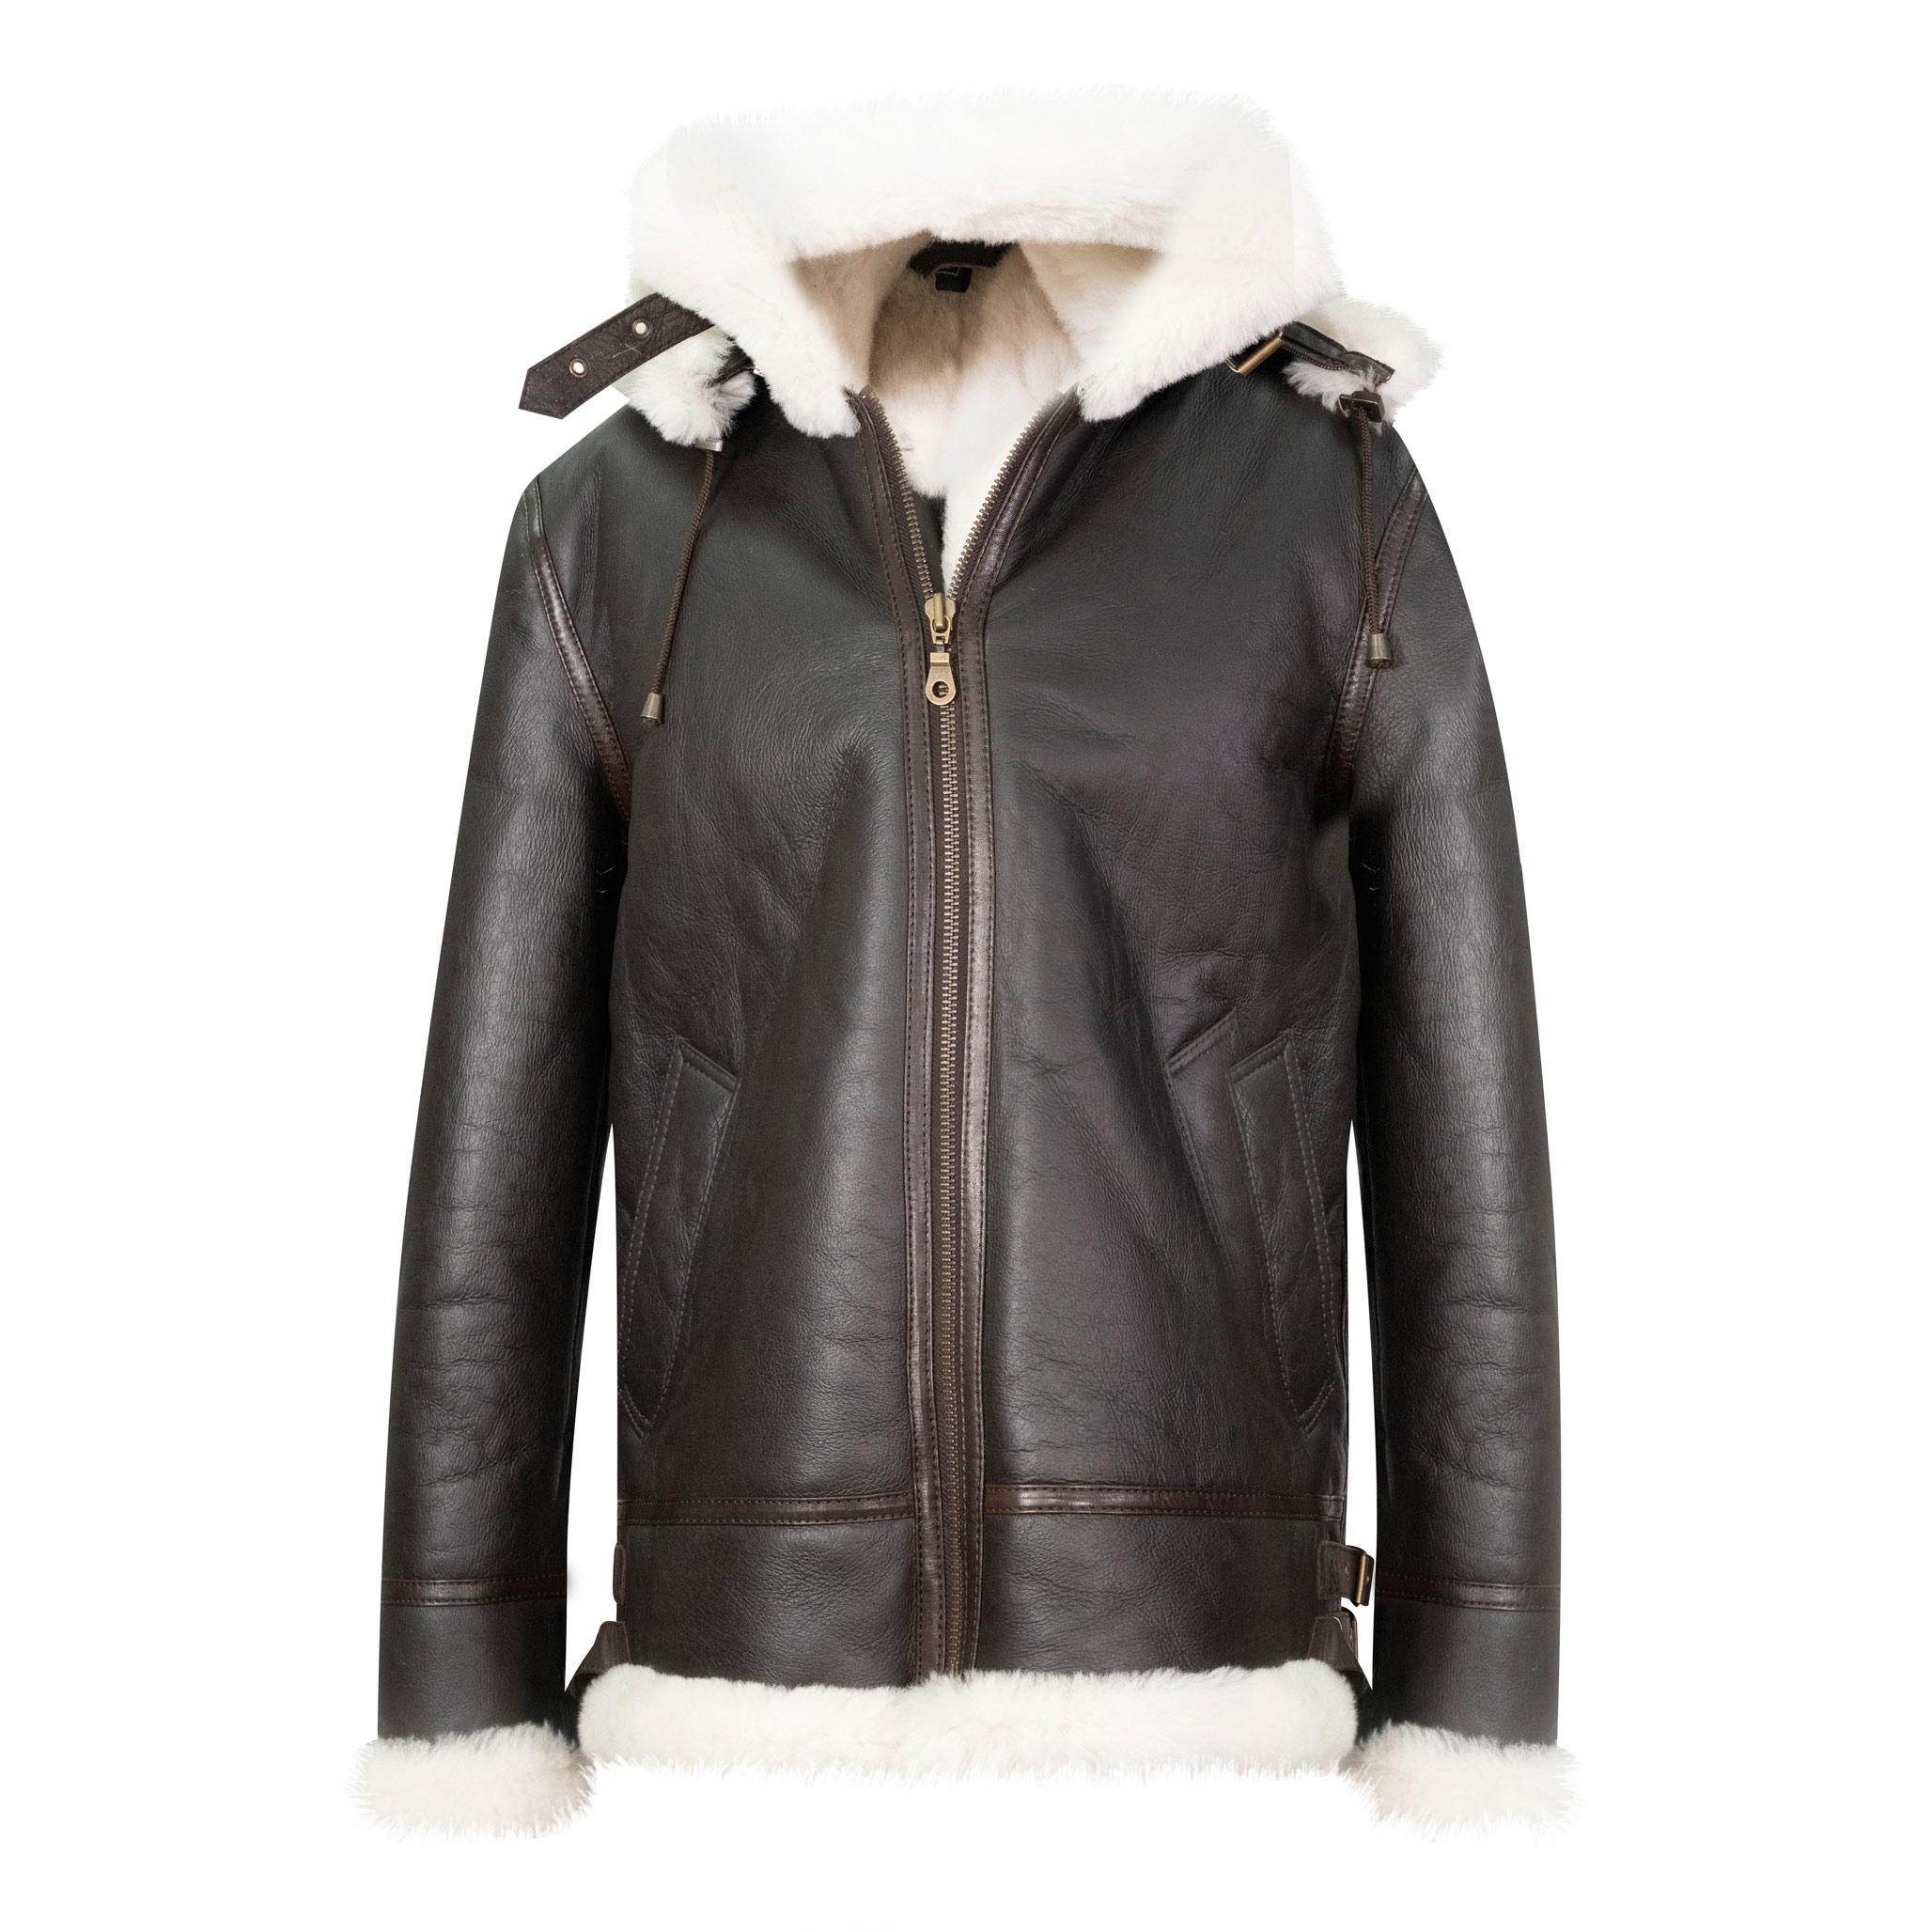 A sleek, dark brown mens sheepskin jacket with a hood. Features thick cream inner fur.